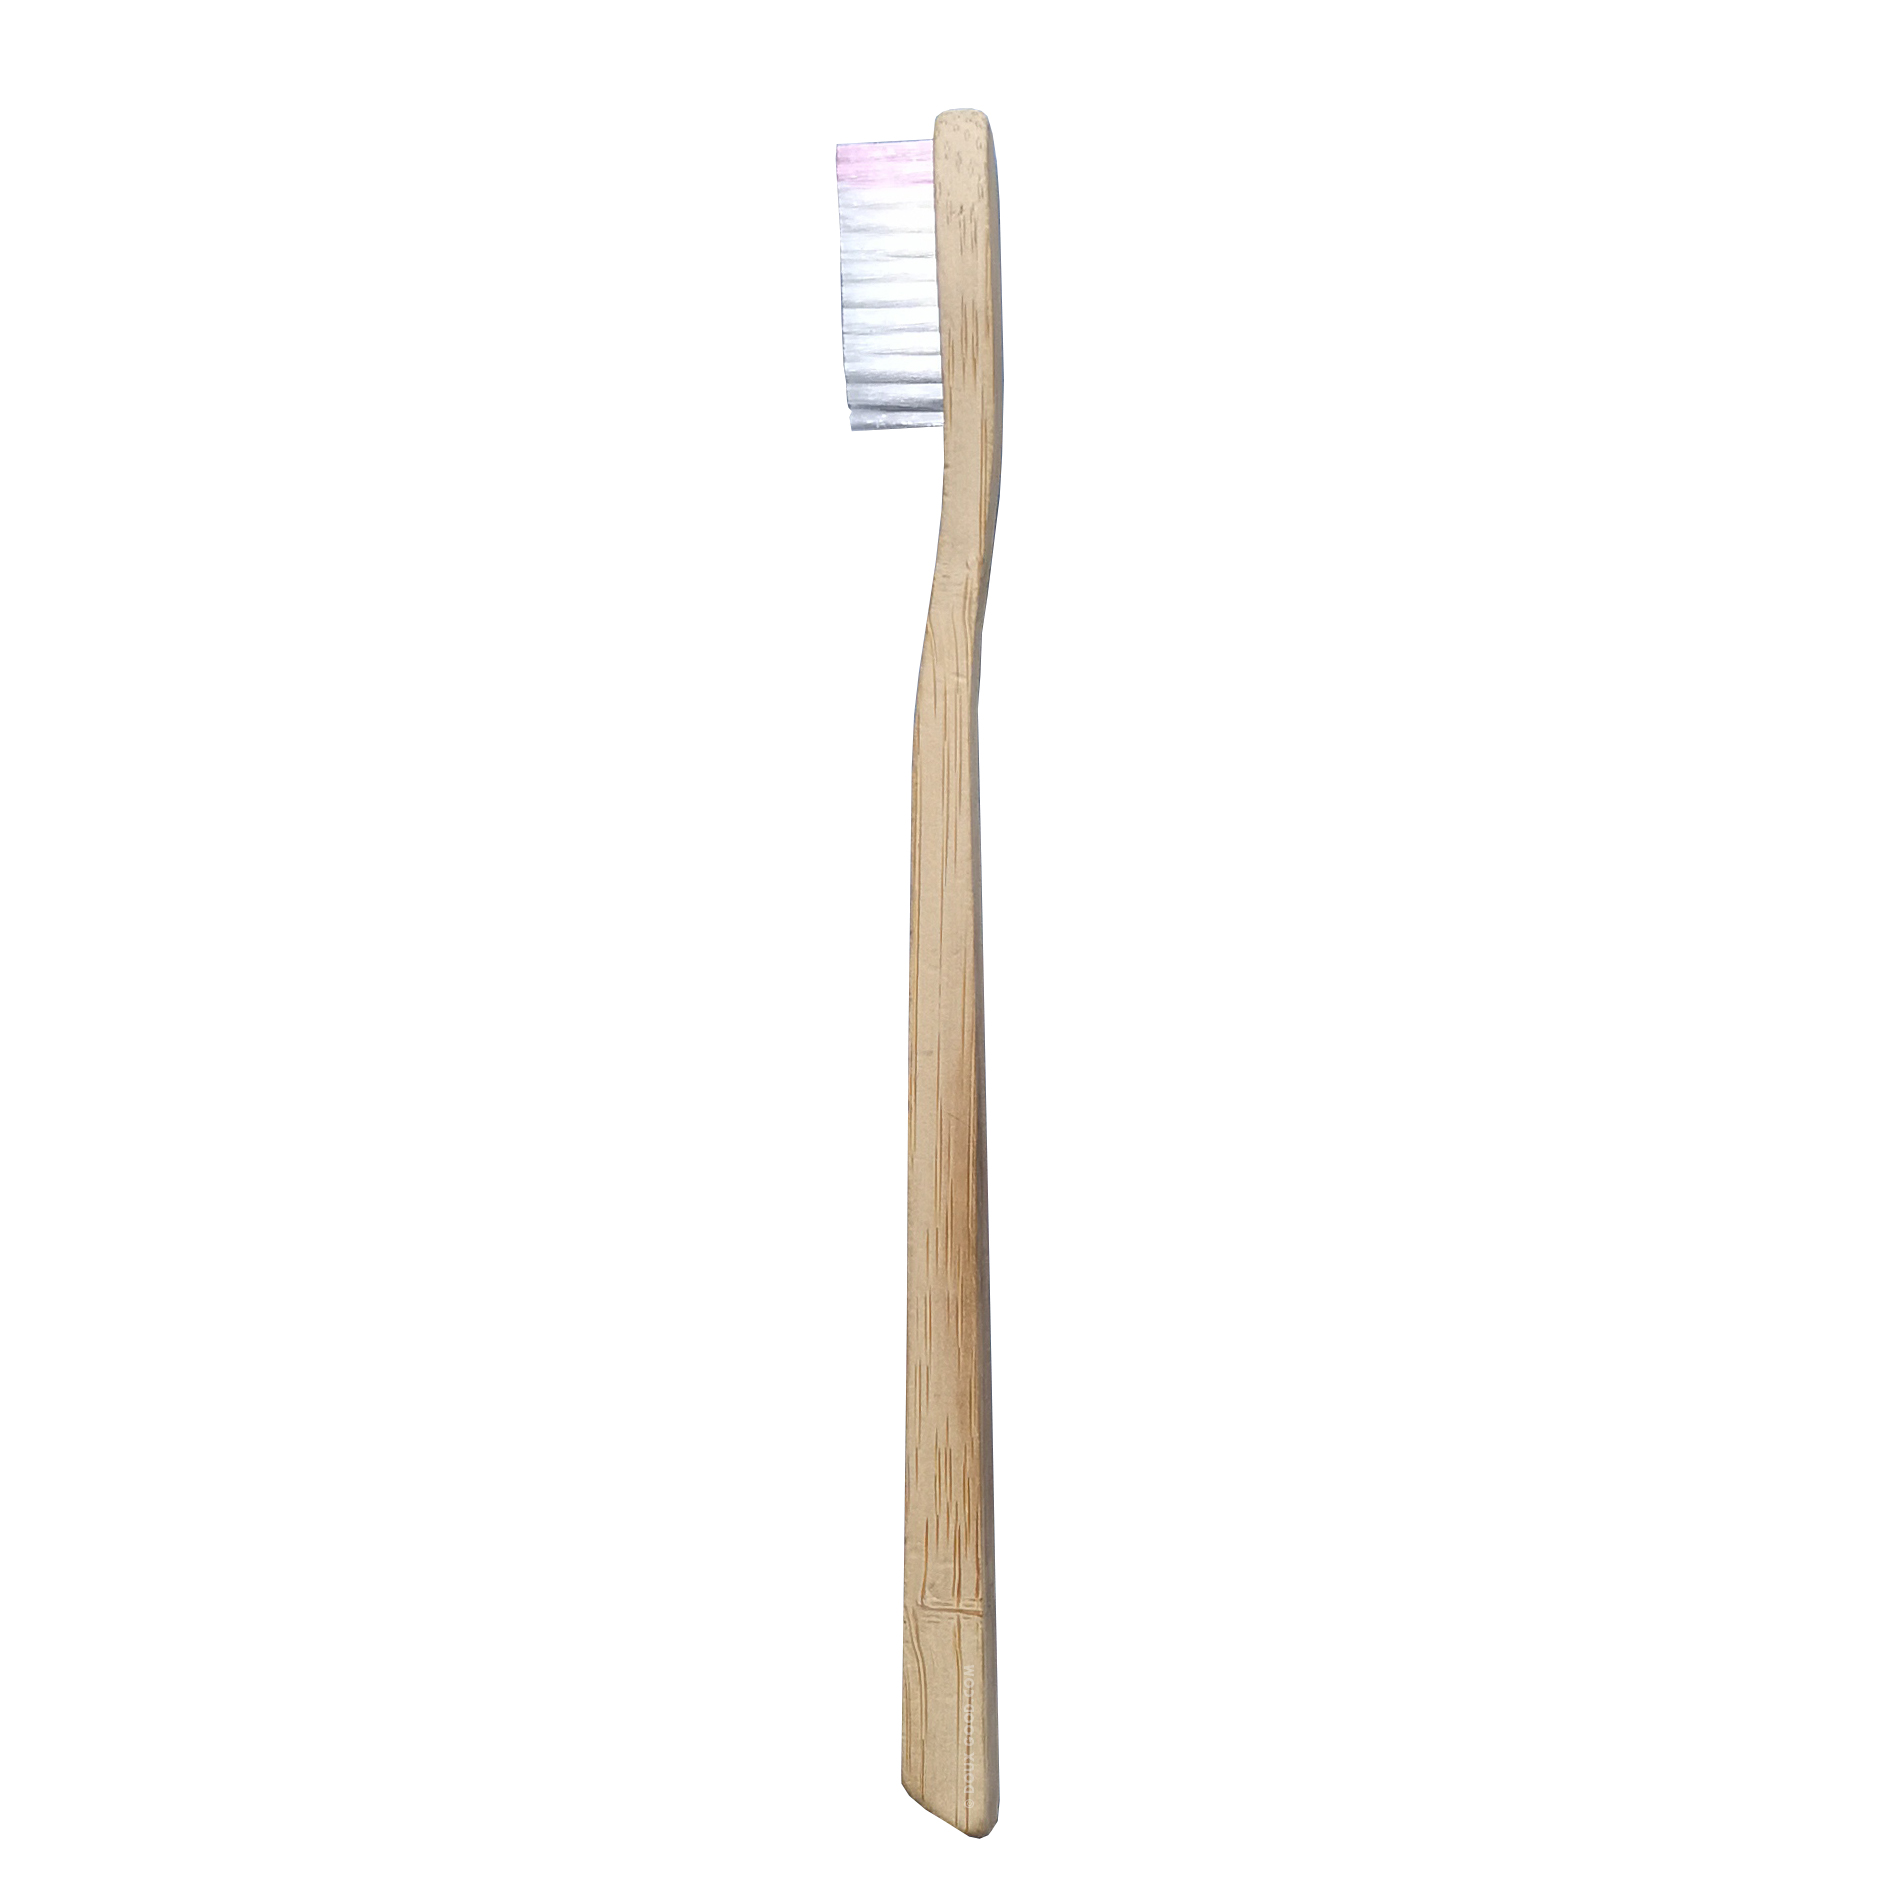 My Boo Company - brosse à dents en bambou - Adulte souple - rose